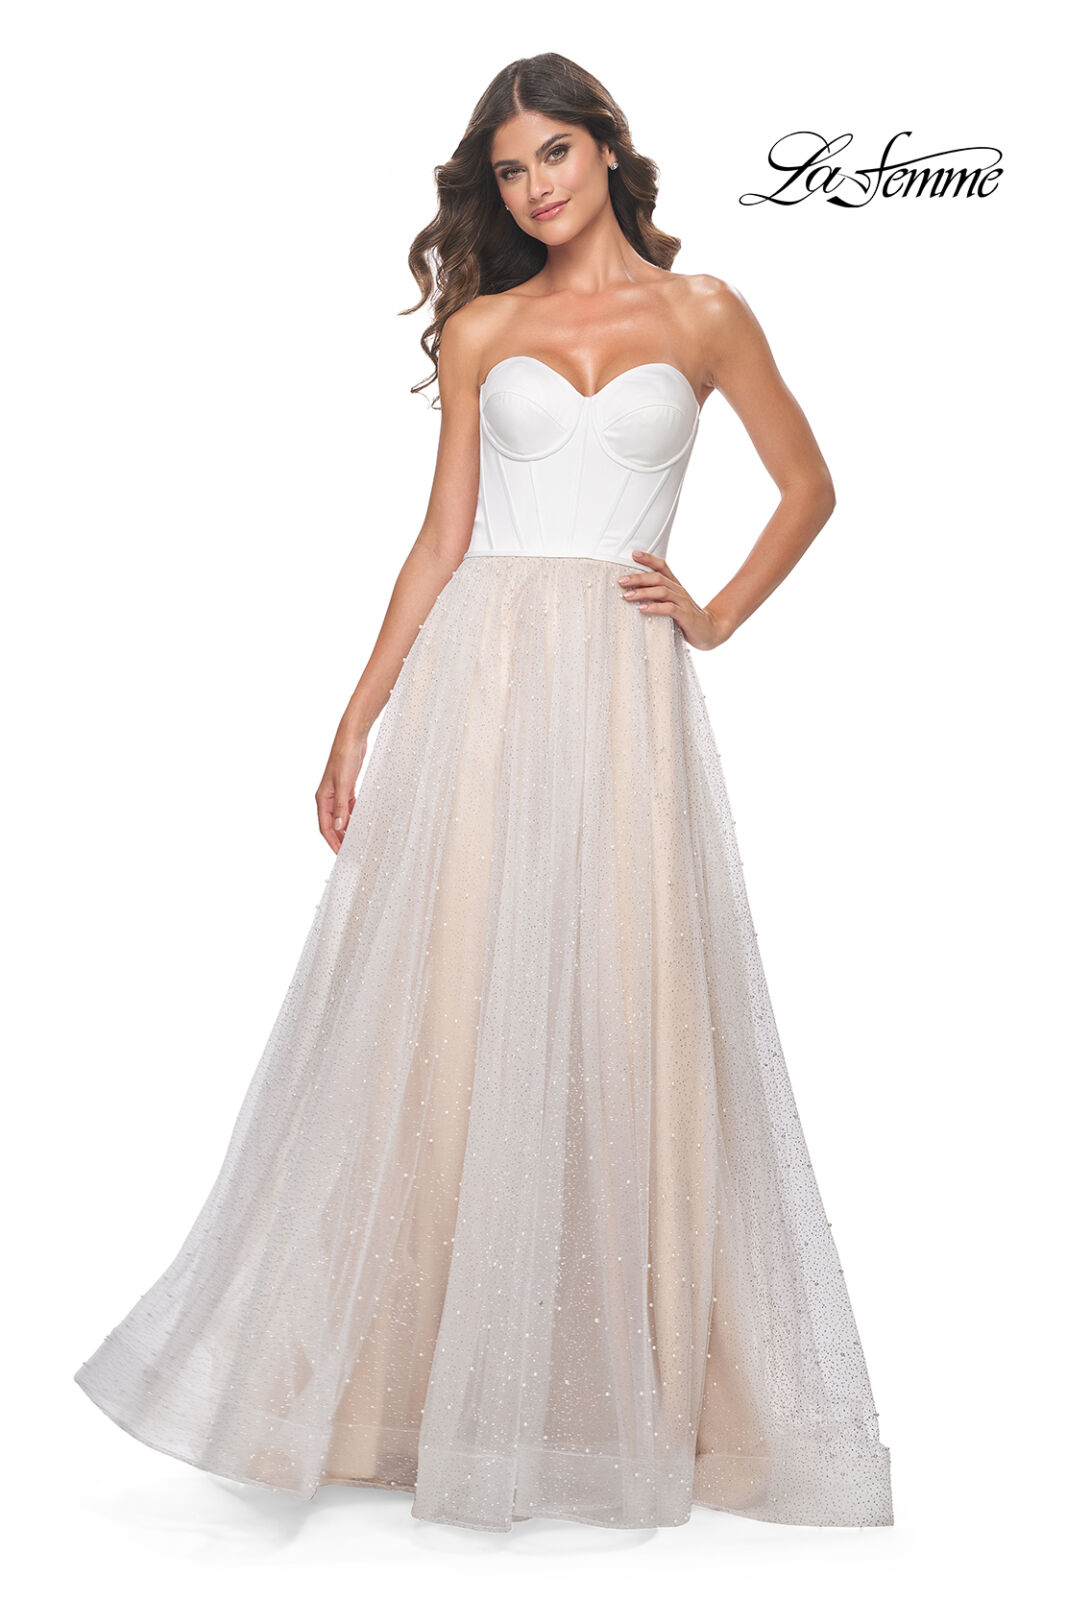 white-nude-prom-dress-1-32149